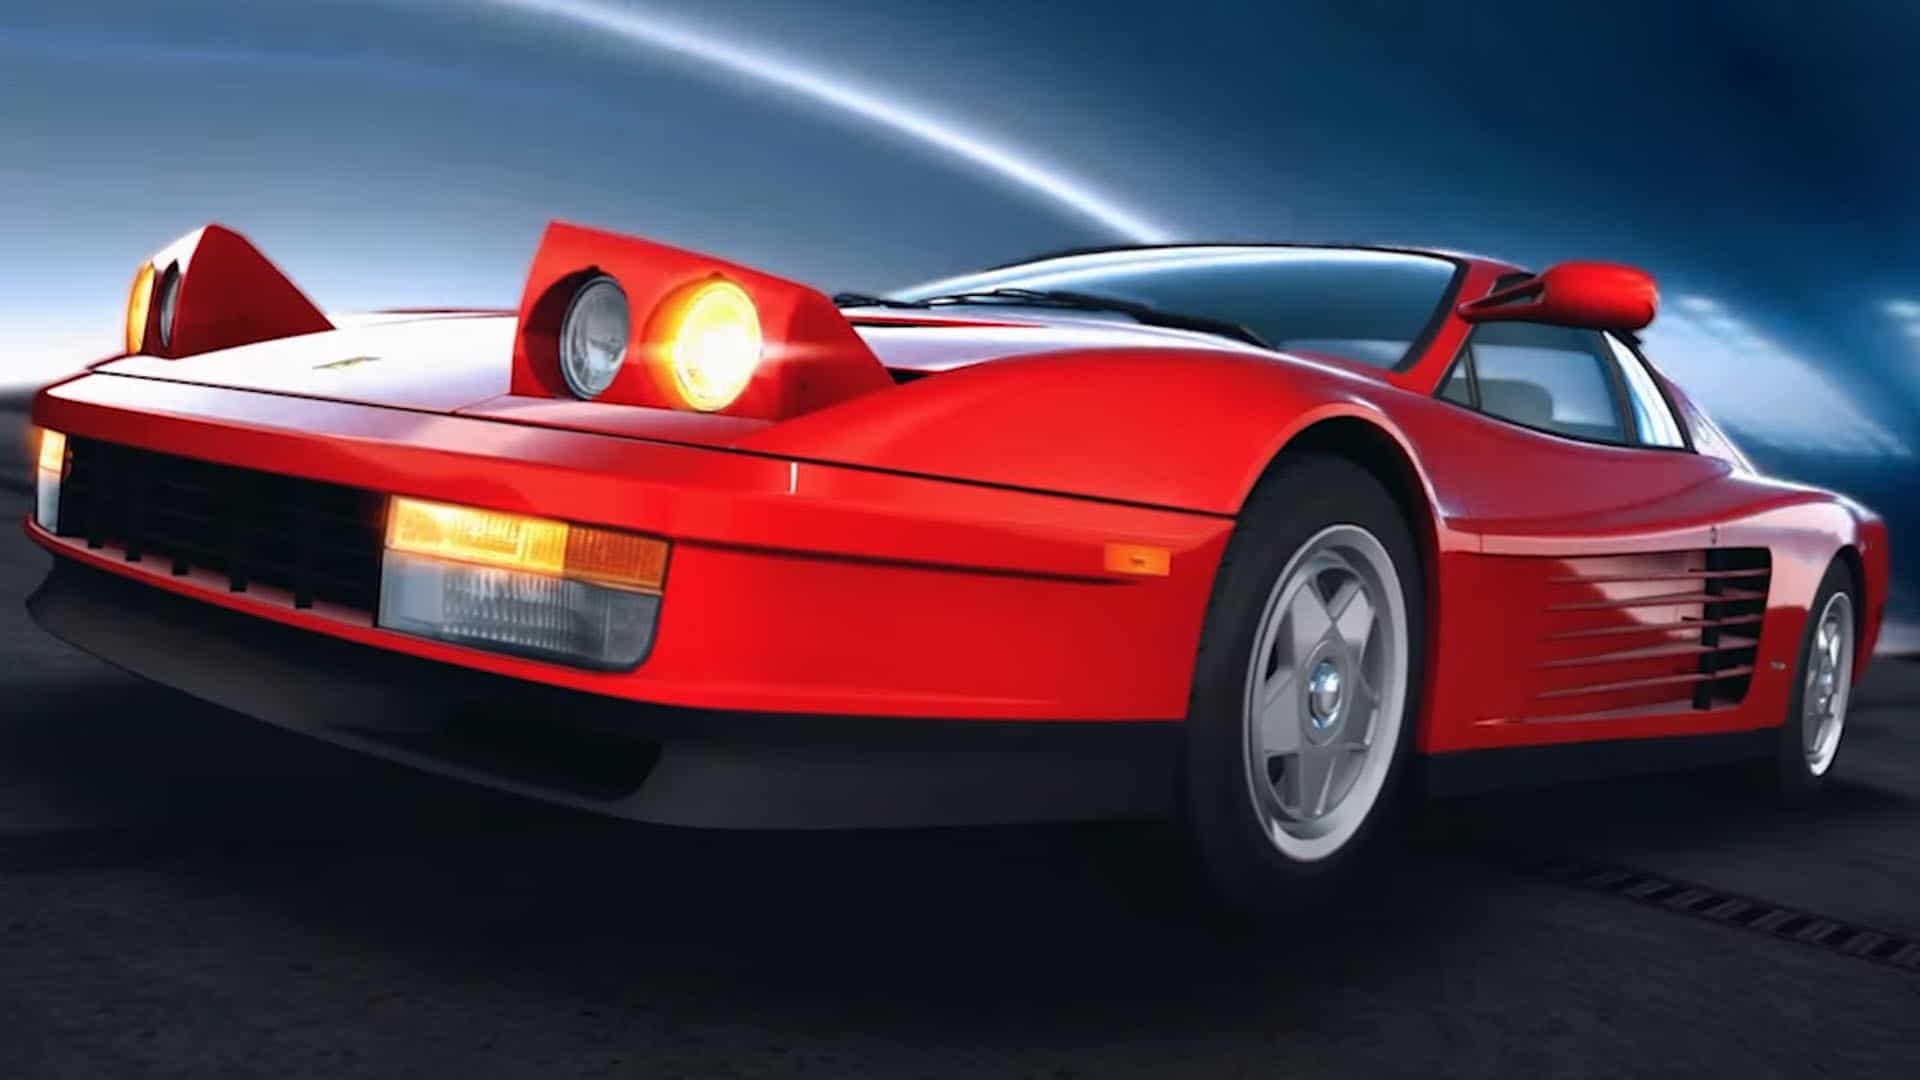 PS5) Gran Turismo 7 IS BEAUTIFUL - Ferrari 458 Italia Gameplay